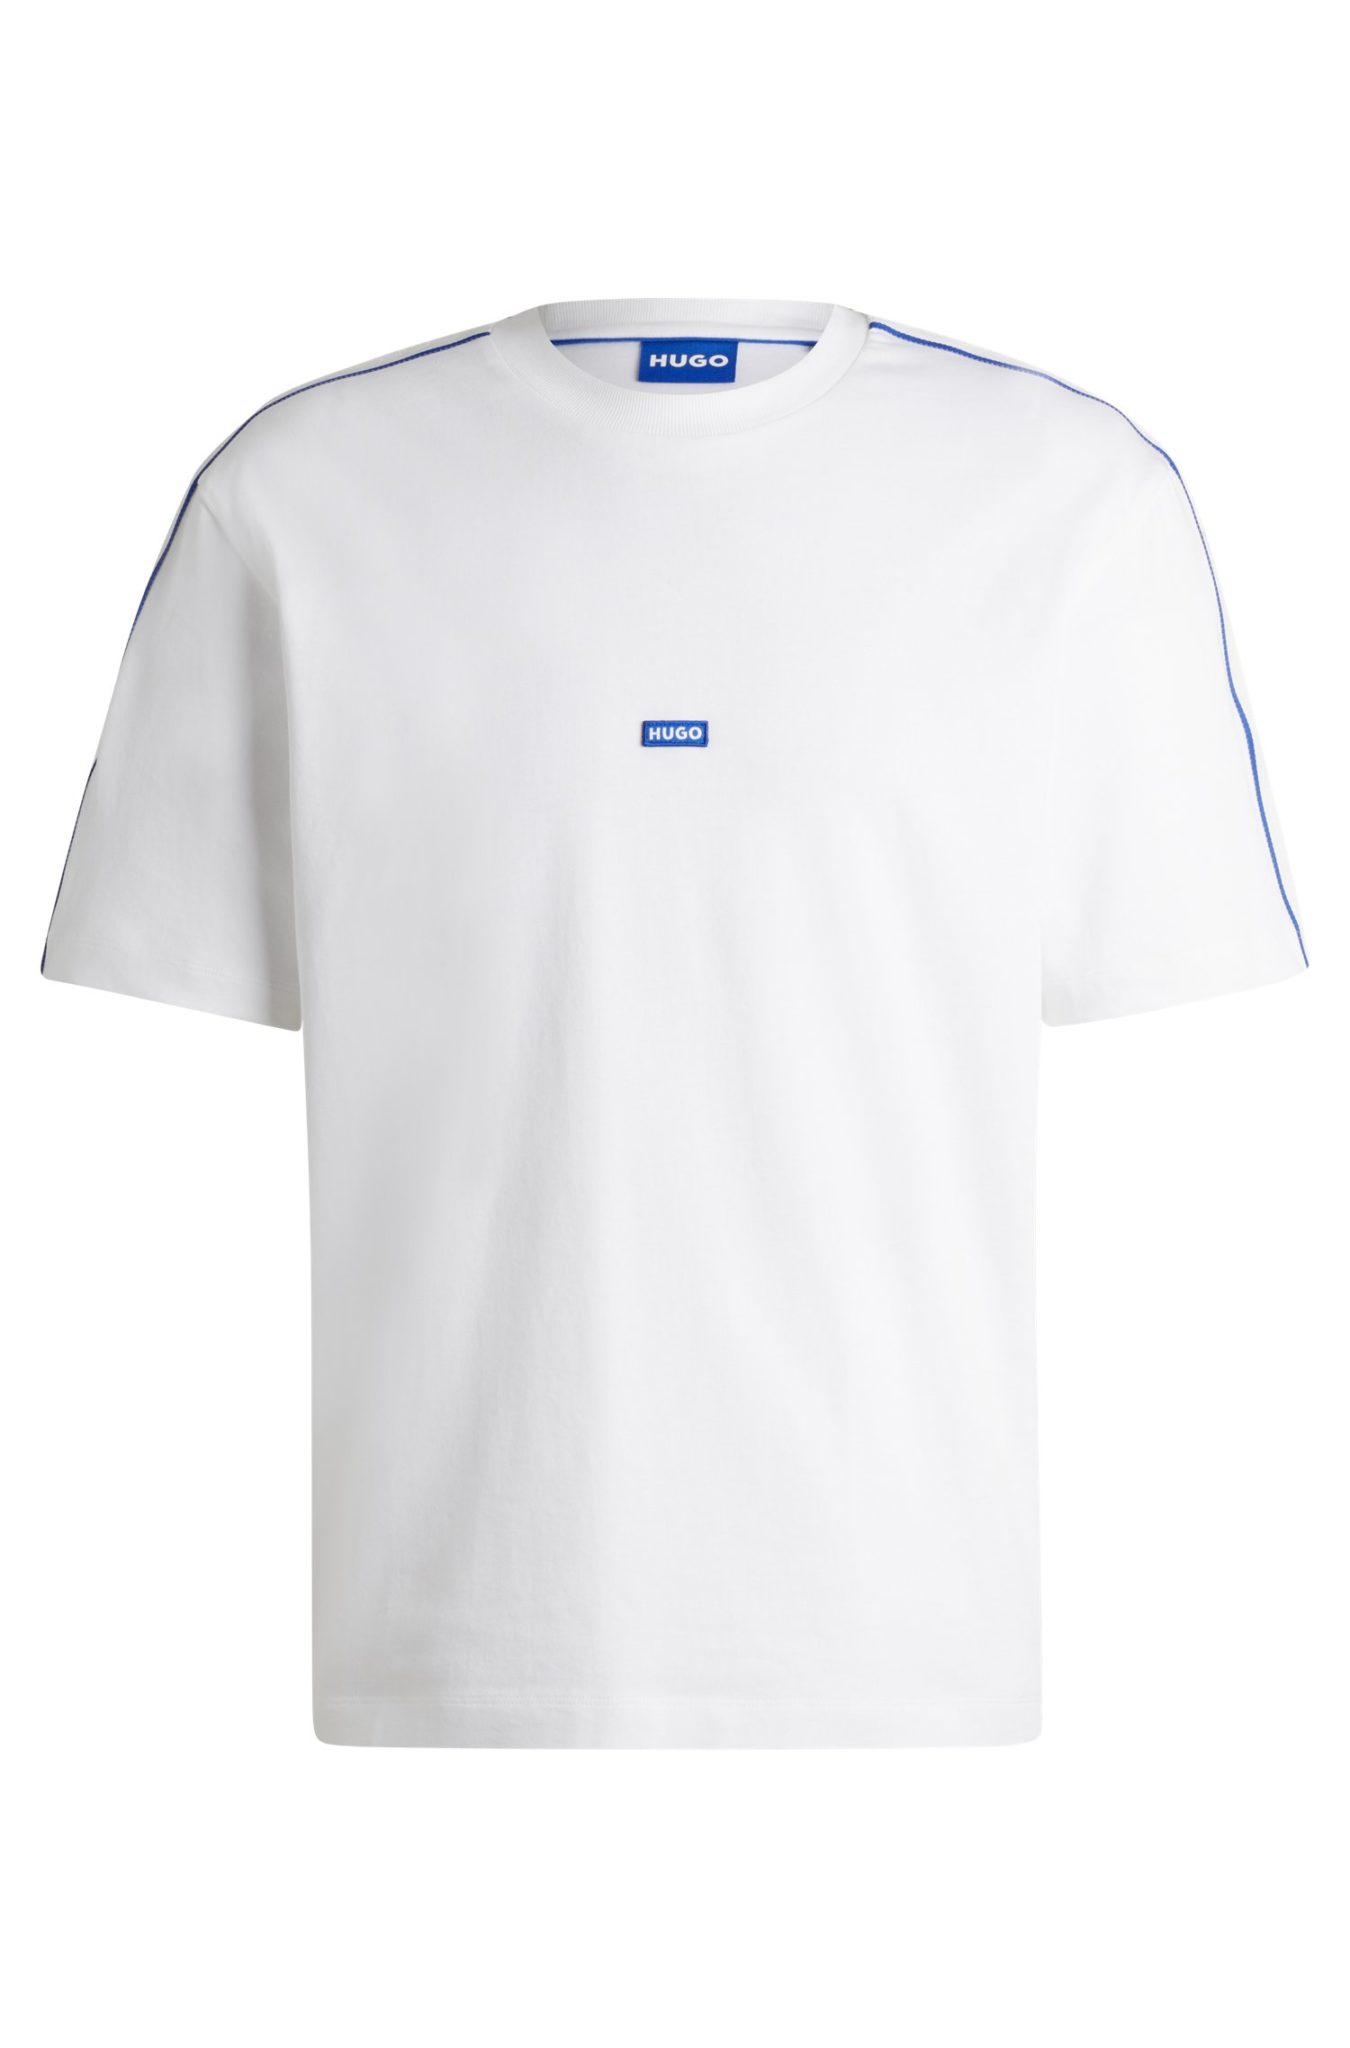 Hugo Boss T-shirt en jersey de coton avec rubans